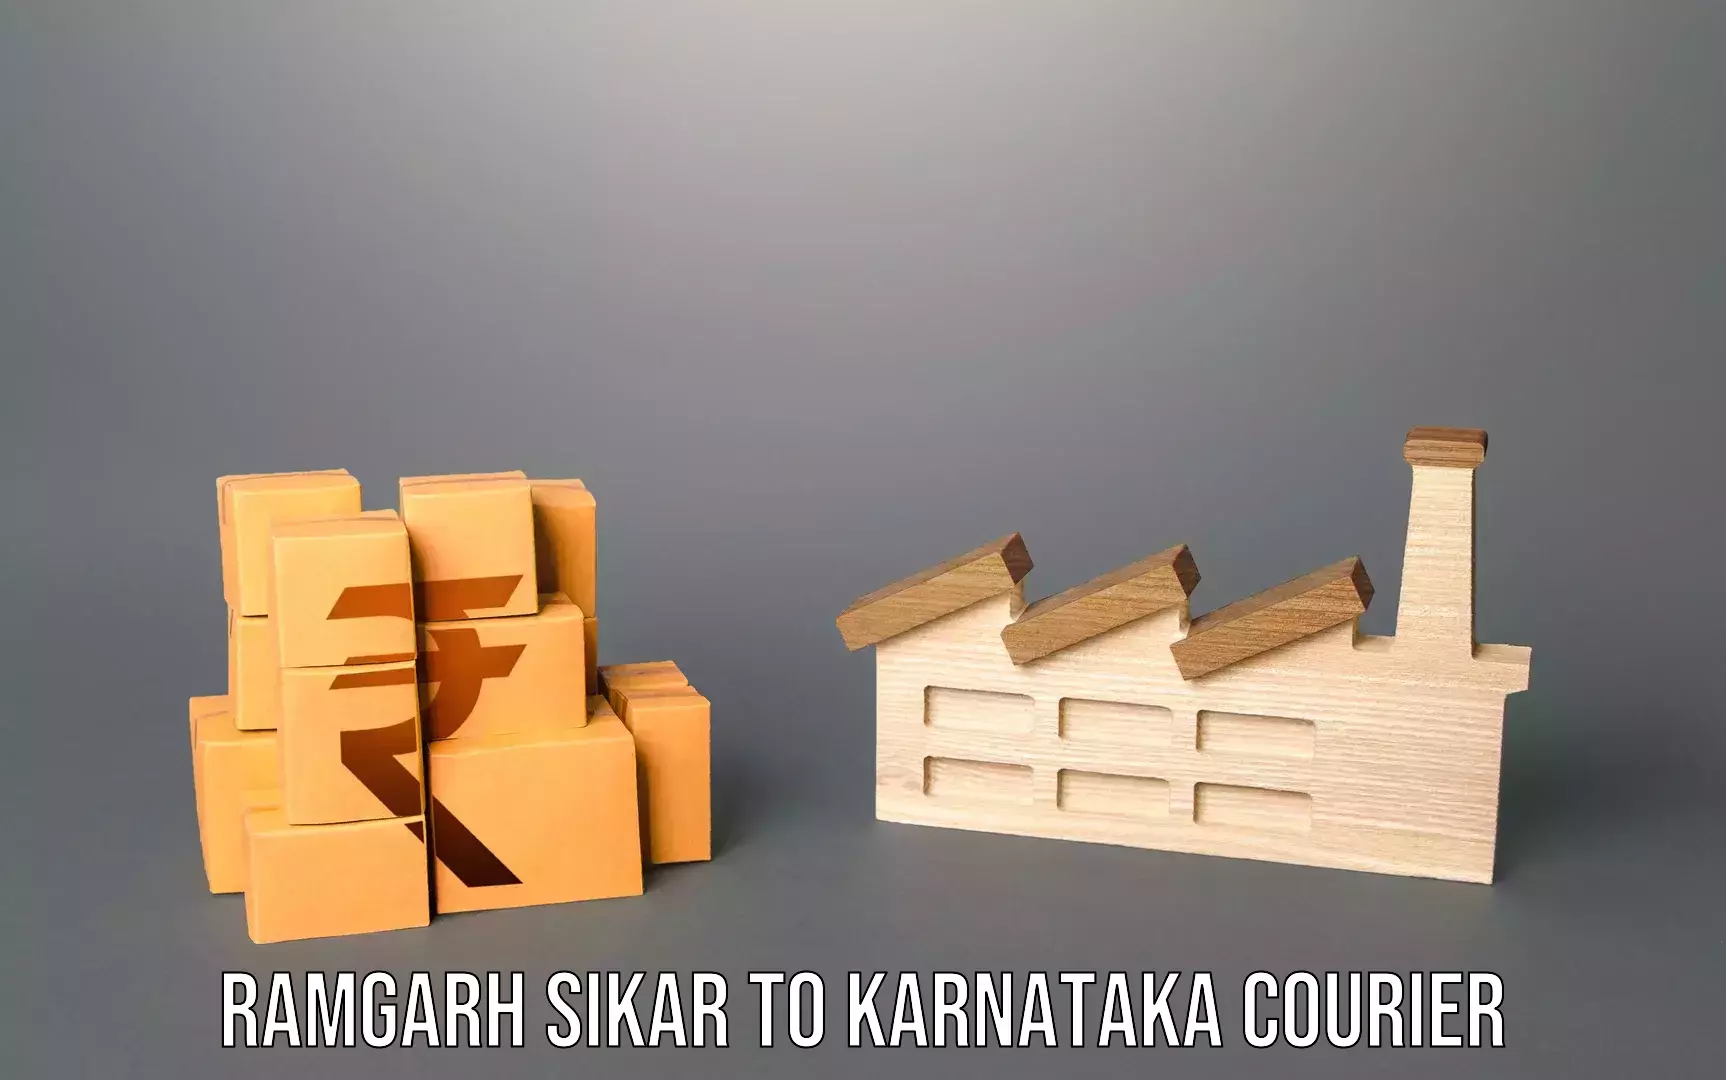 Emergency baggage service Ramgarh Sikar to Karnataka